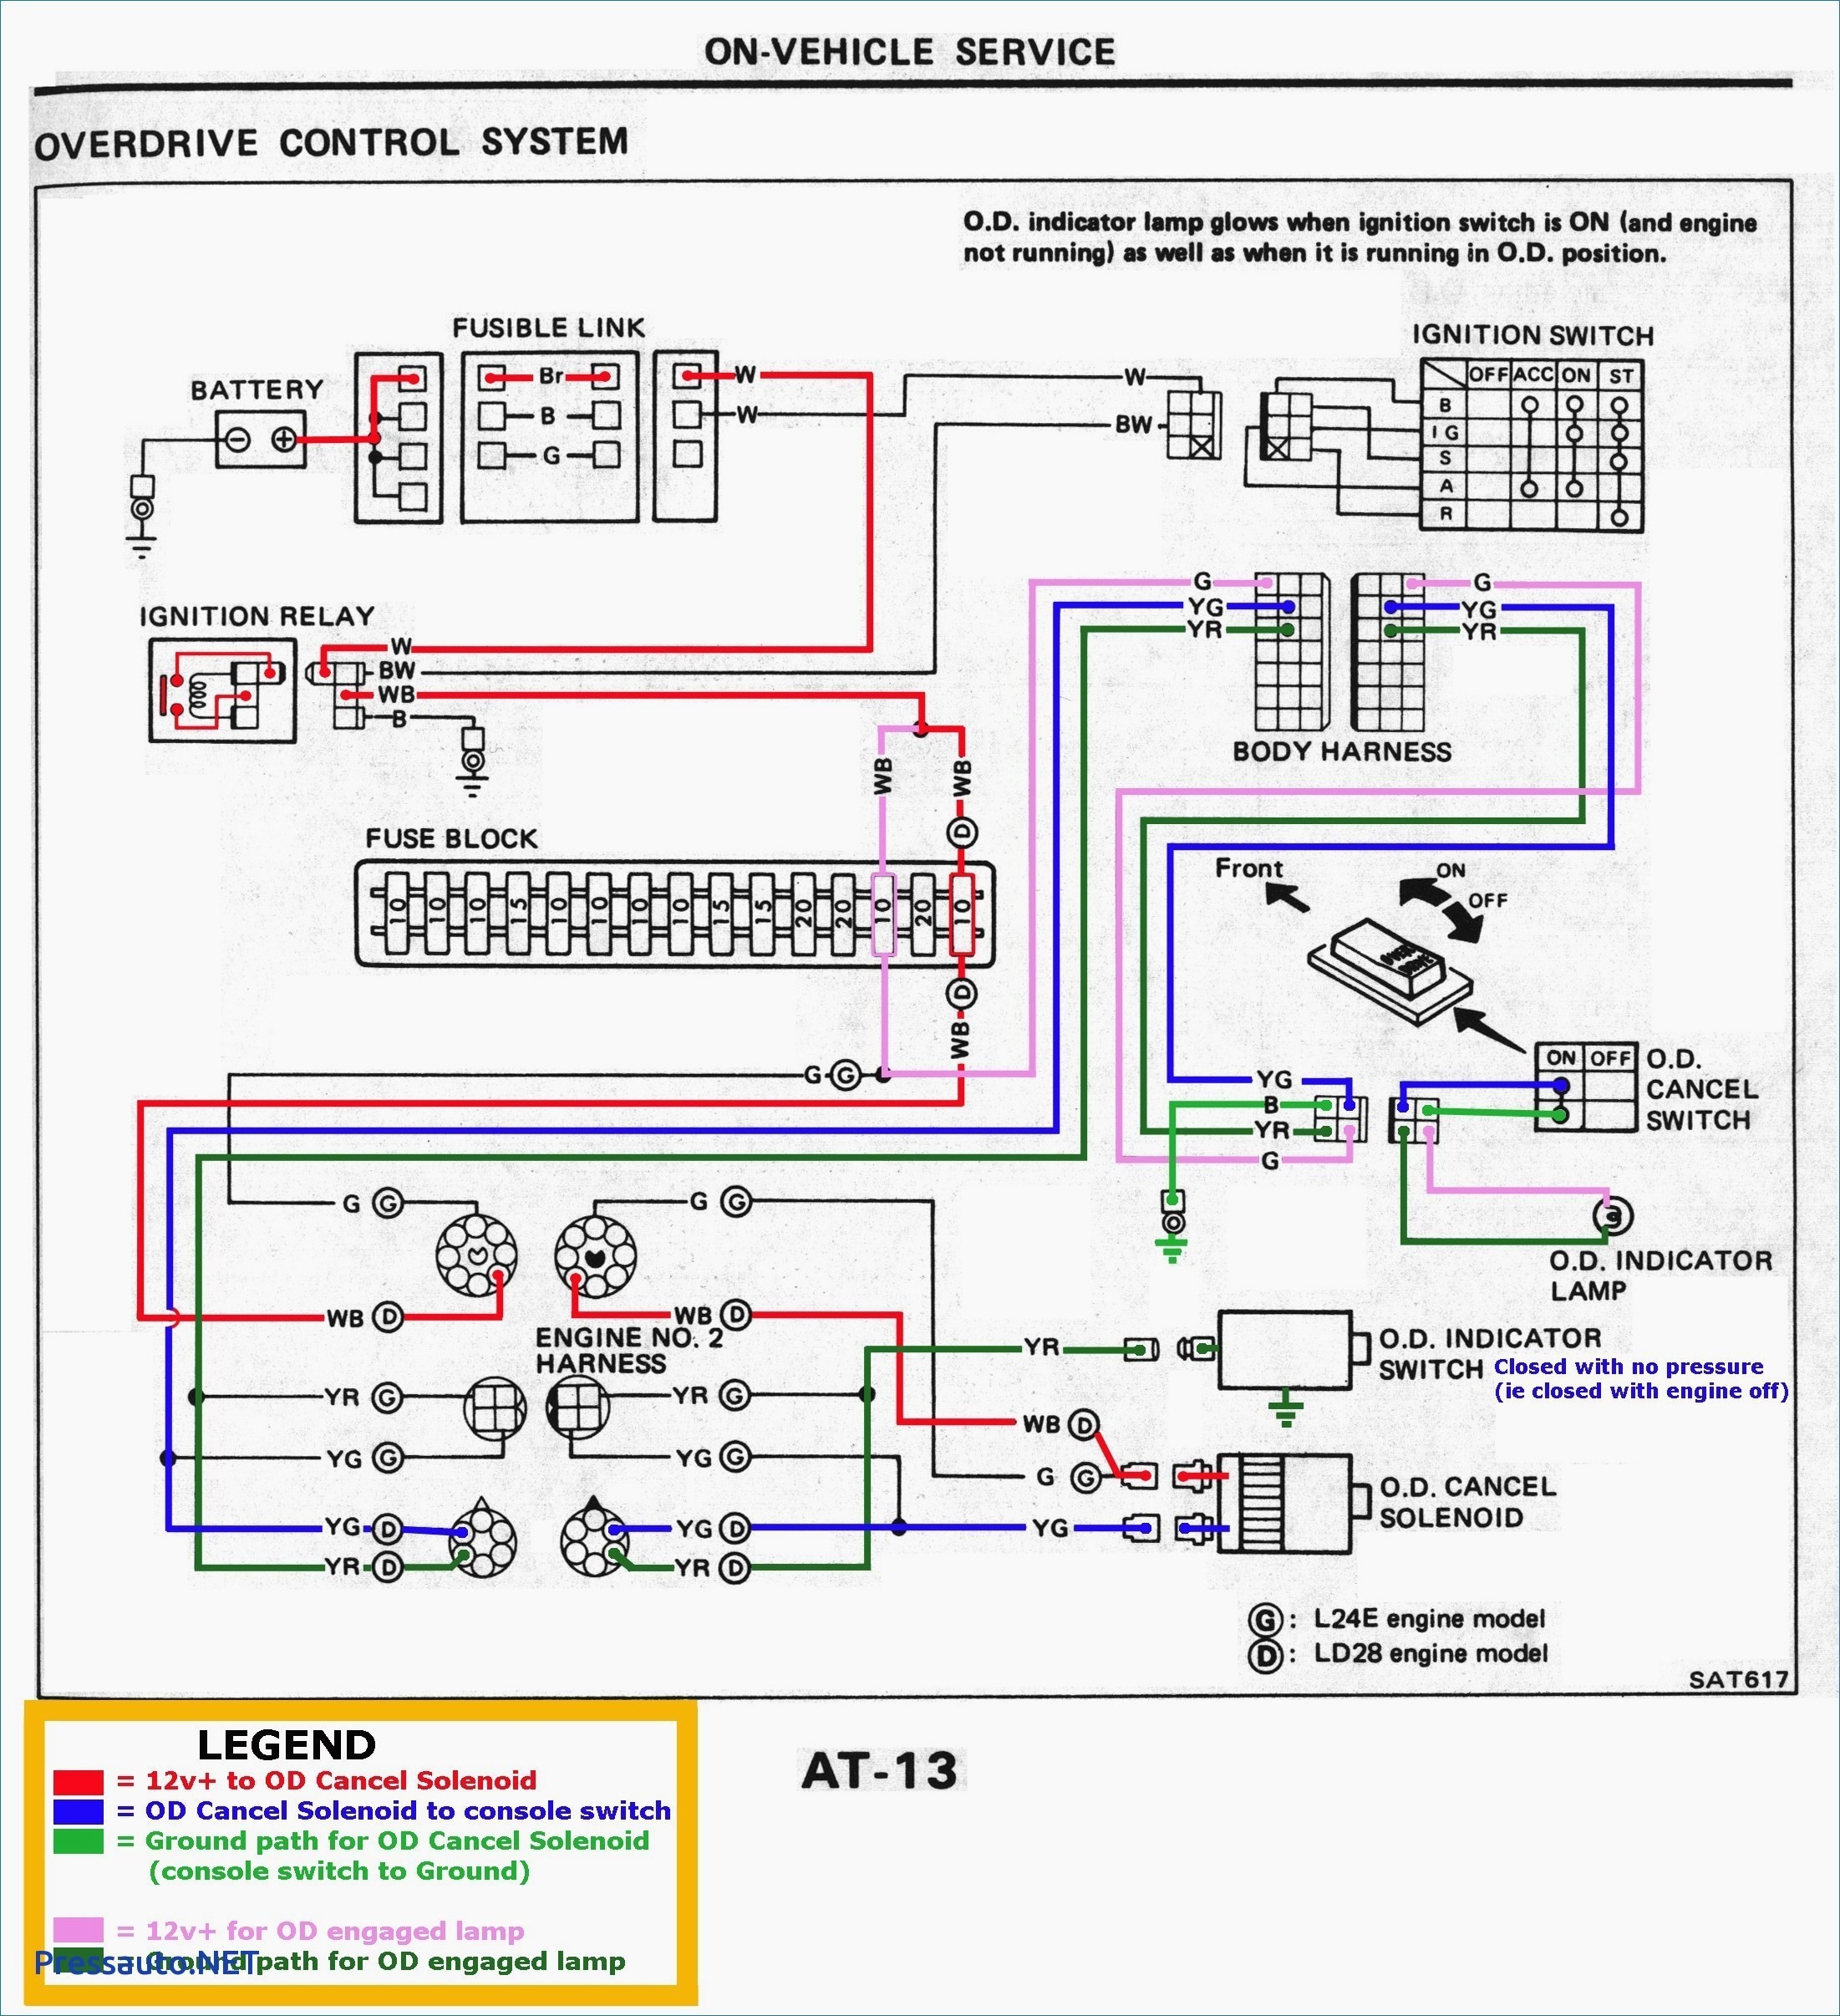 2010 Dodge Charger Engine Diagram 2006 Ram Fuse Box Wiring Diagram Inside Of 2010 Dodge Charger Engine Diagram